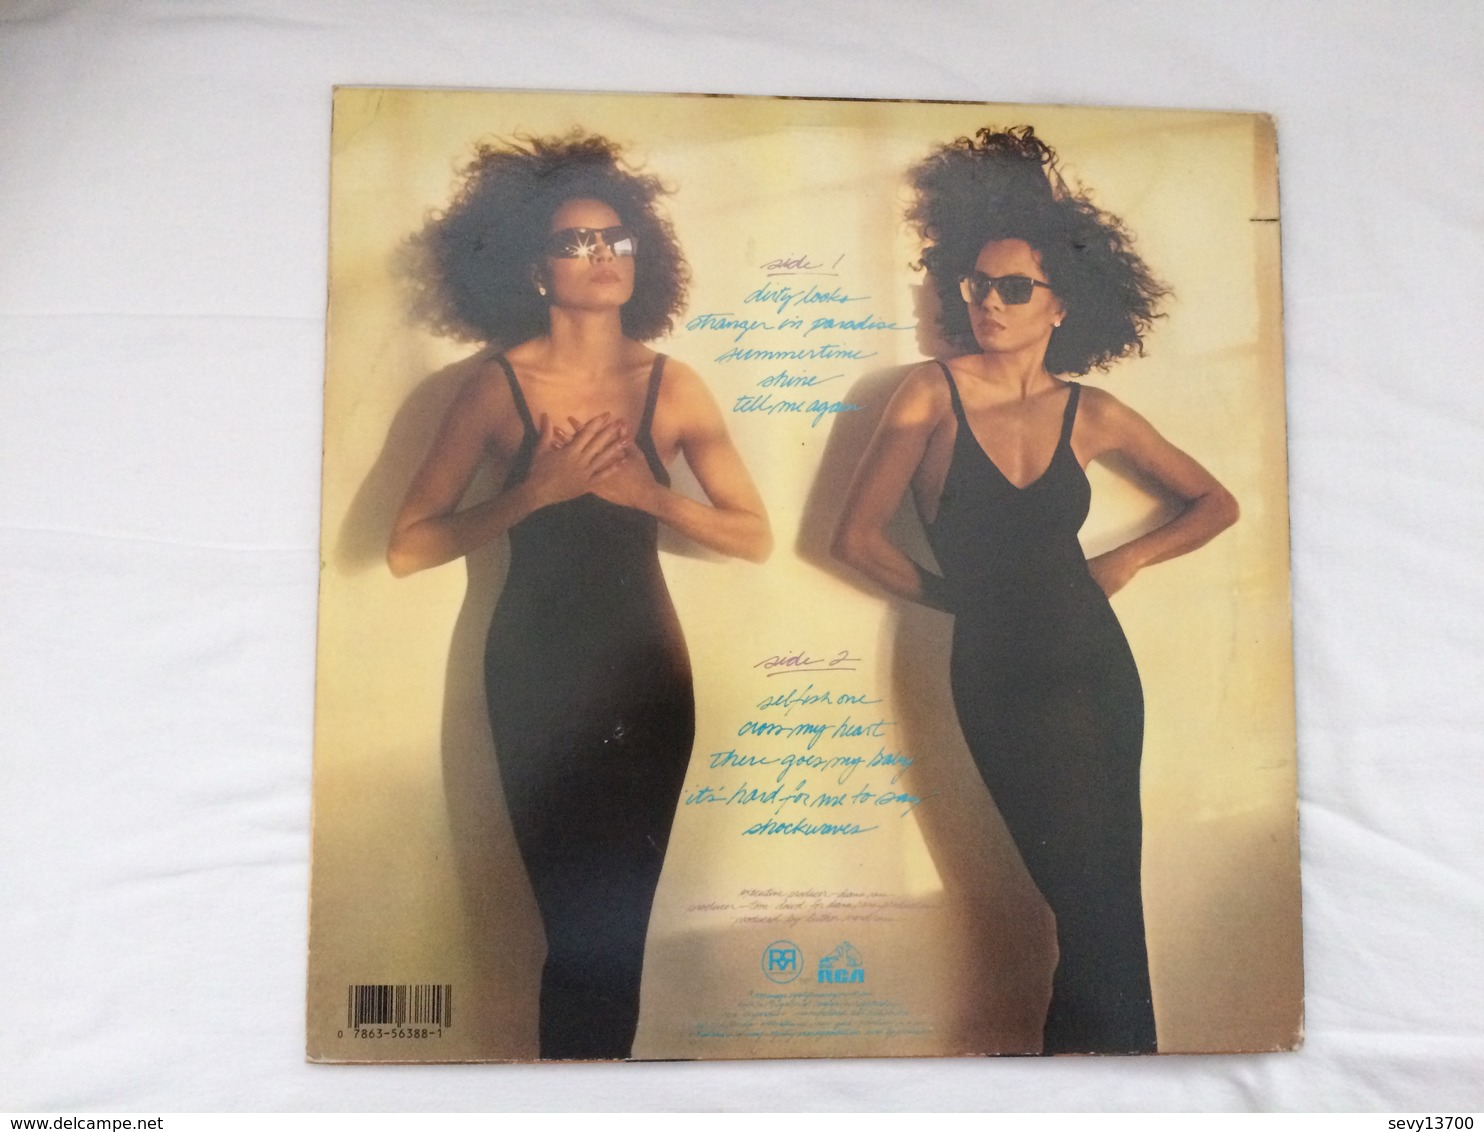 Disque 33 Tours - 6388-1-R - 1987 Made In USA - Diana Ross Red Hot - Bandeau Collé Sur La Pochette "Optical Affairs Chri - Blues